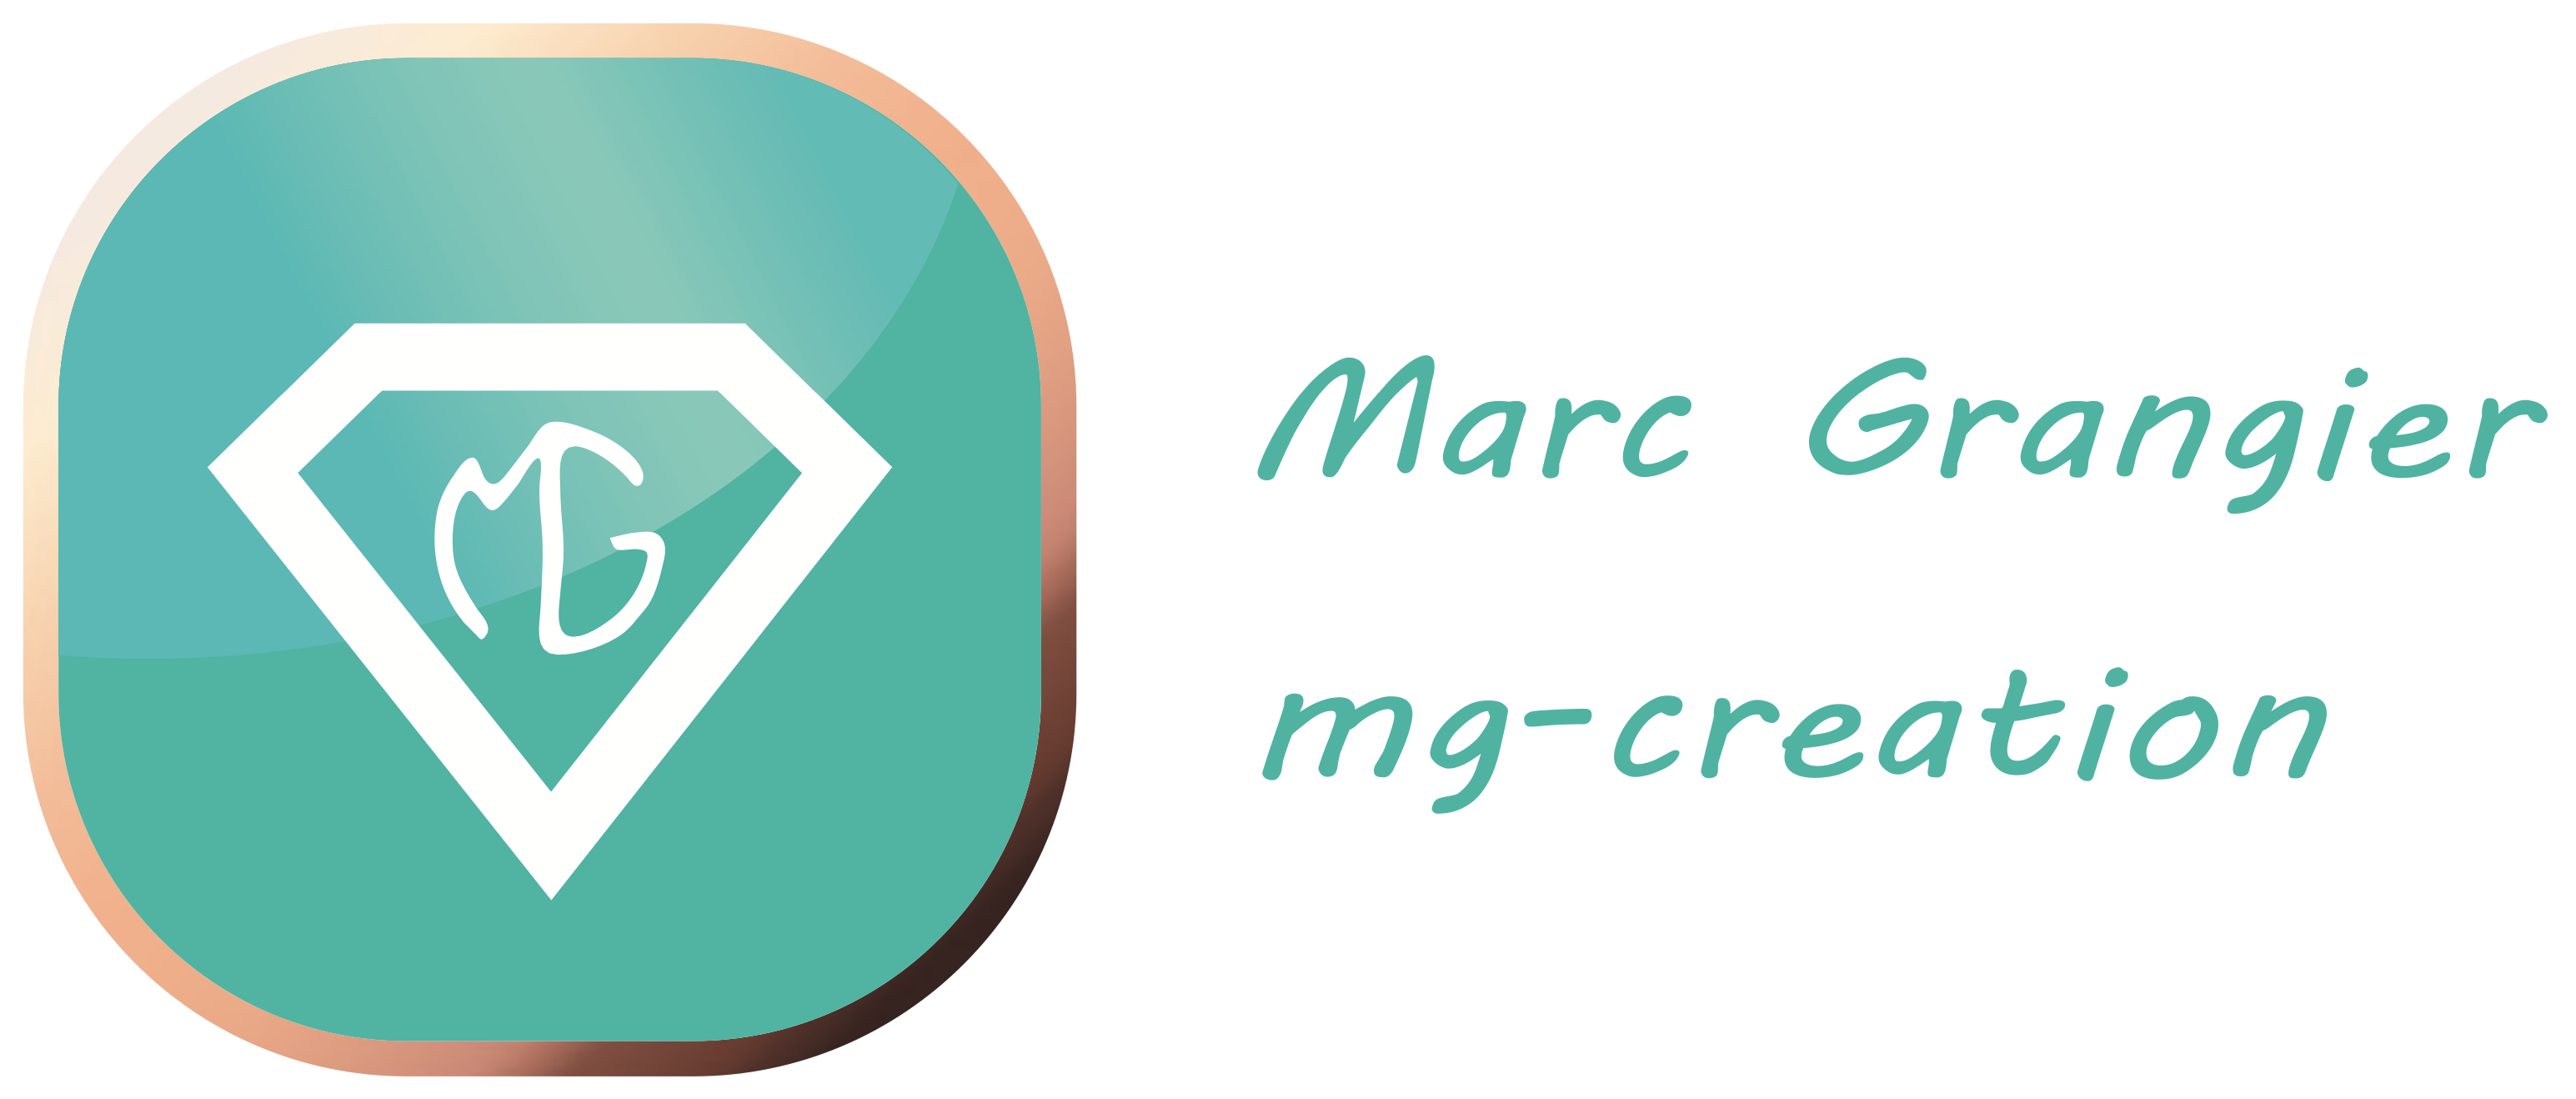 Artisan bijoutier Marc Grangier mg-creation